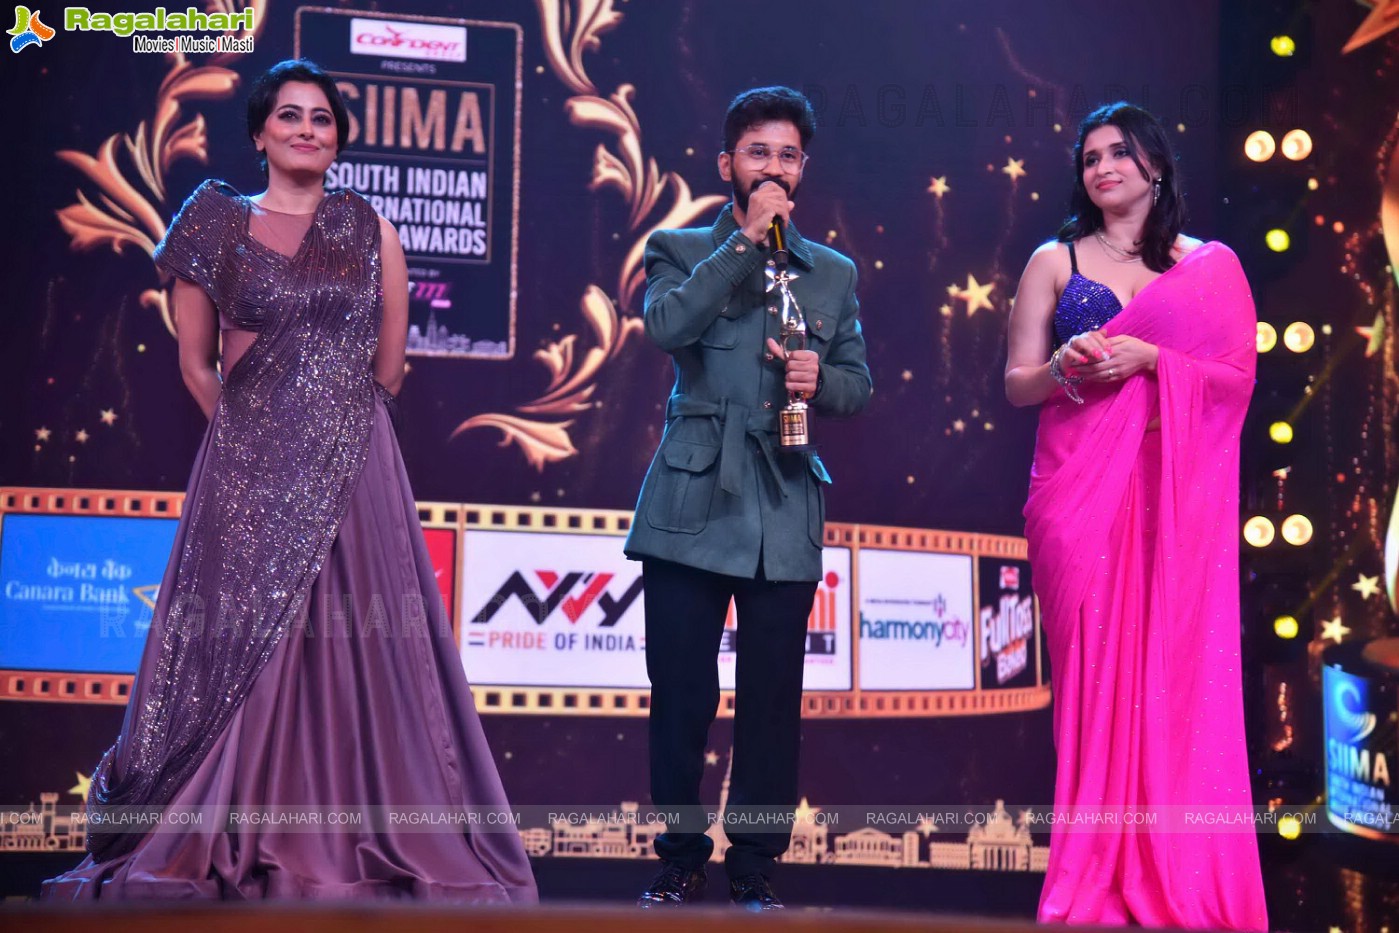 SIIMA: South Indian International Movie Awards 2022 at Garden City of India, Bengaluru